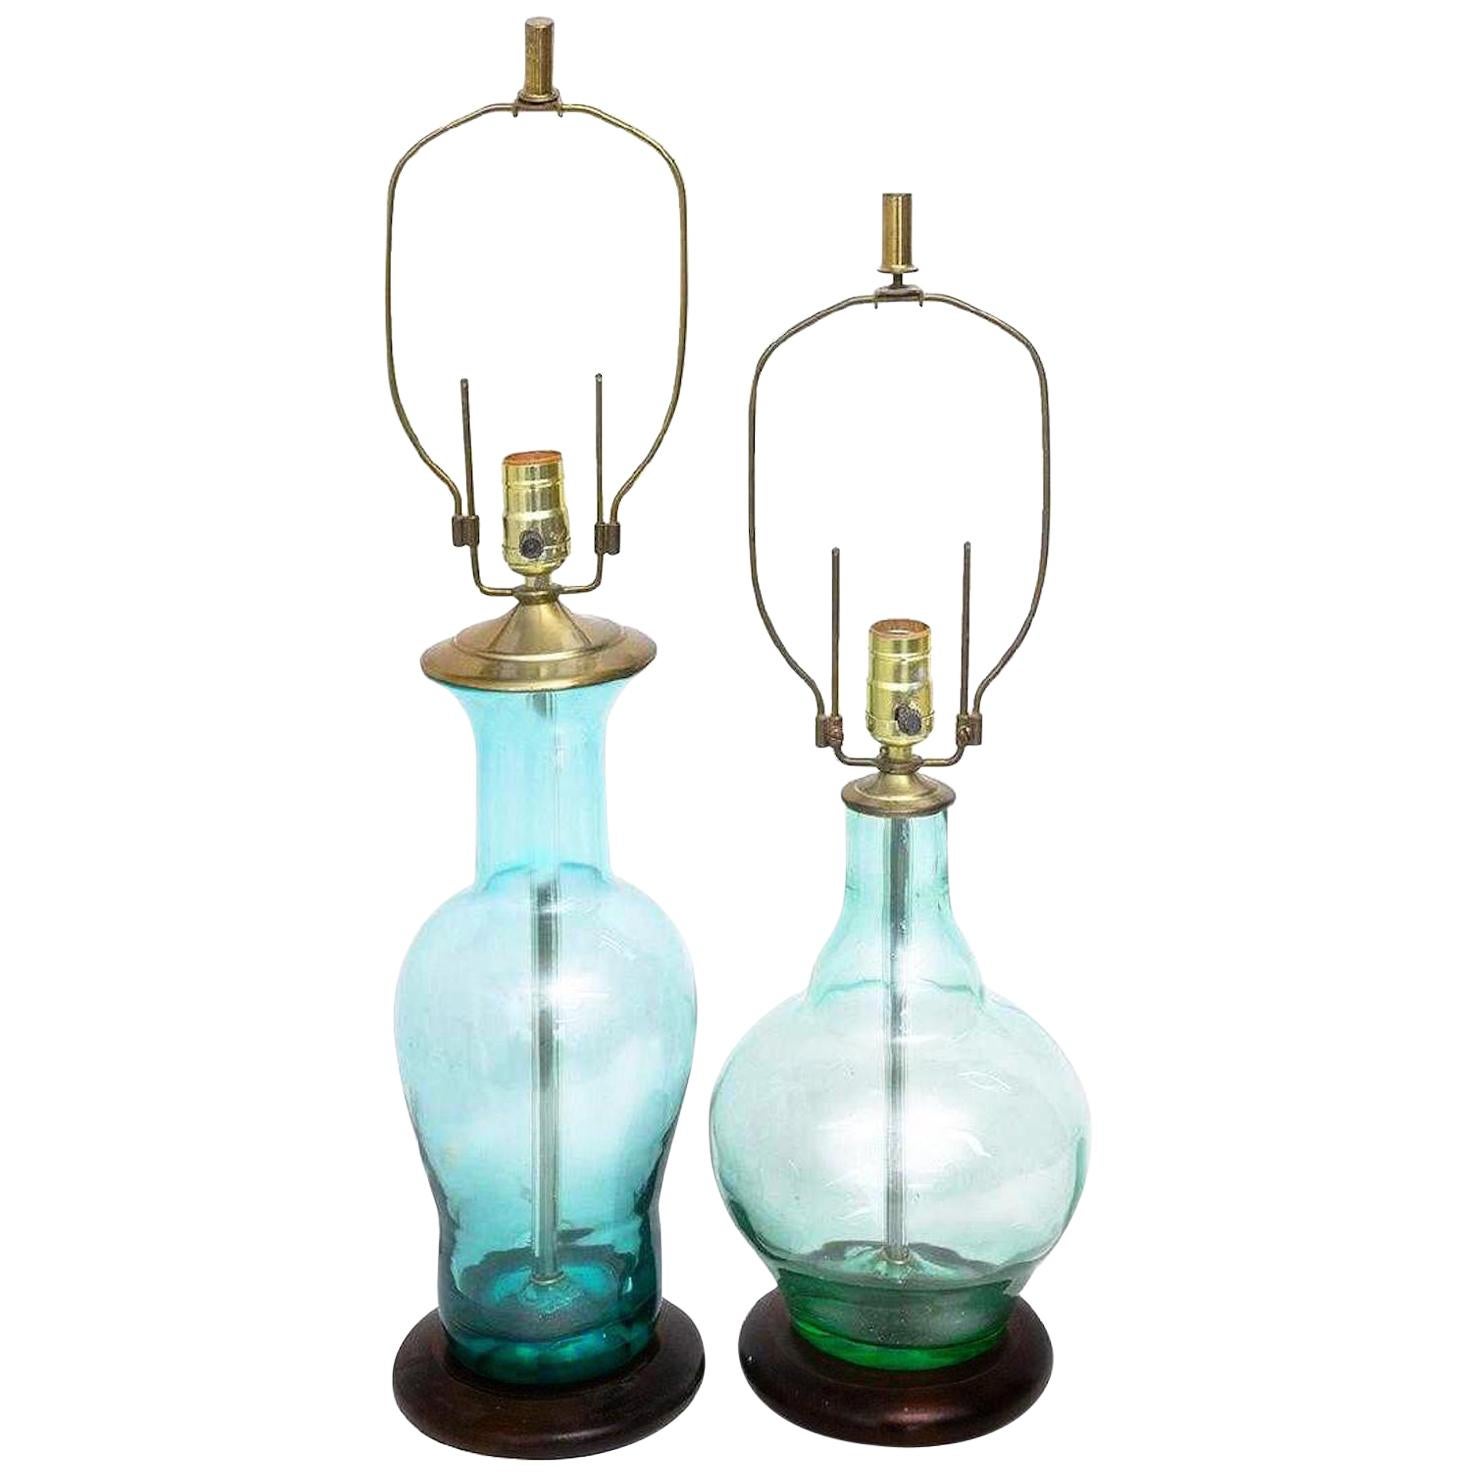 Blenko Midcentury Seafoam & Aqua Art Glass Table Lamp Pair, Scandinavian Modern